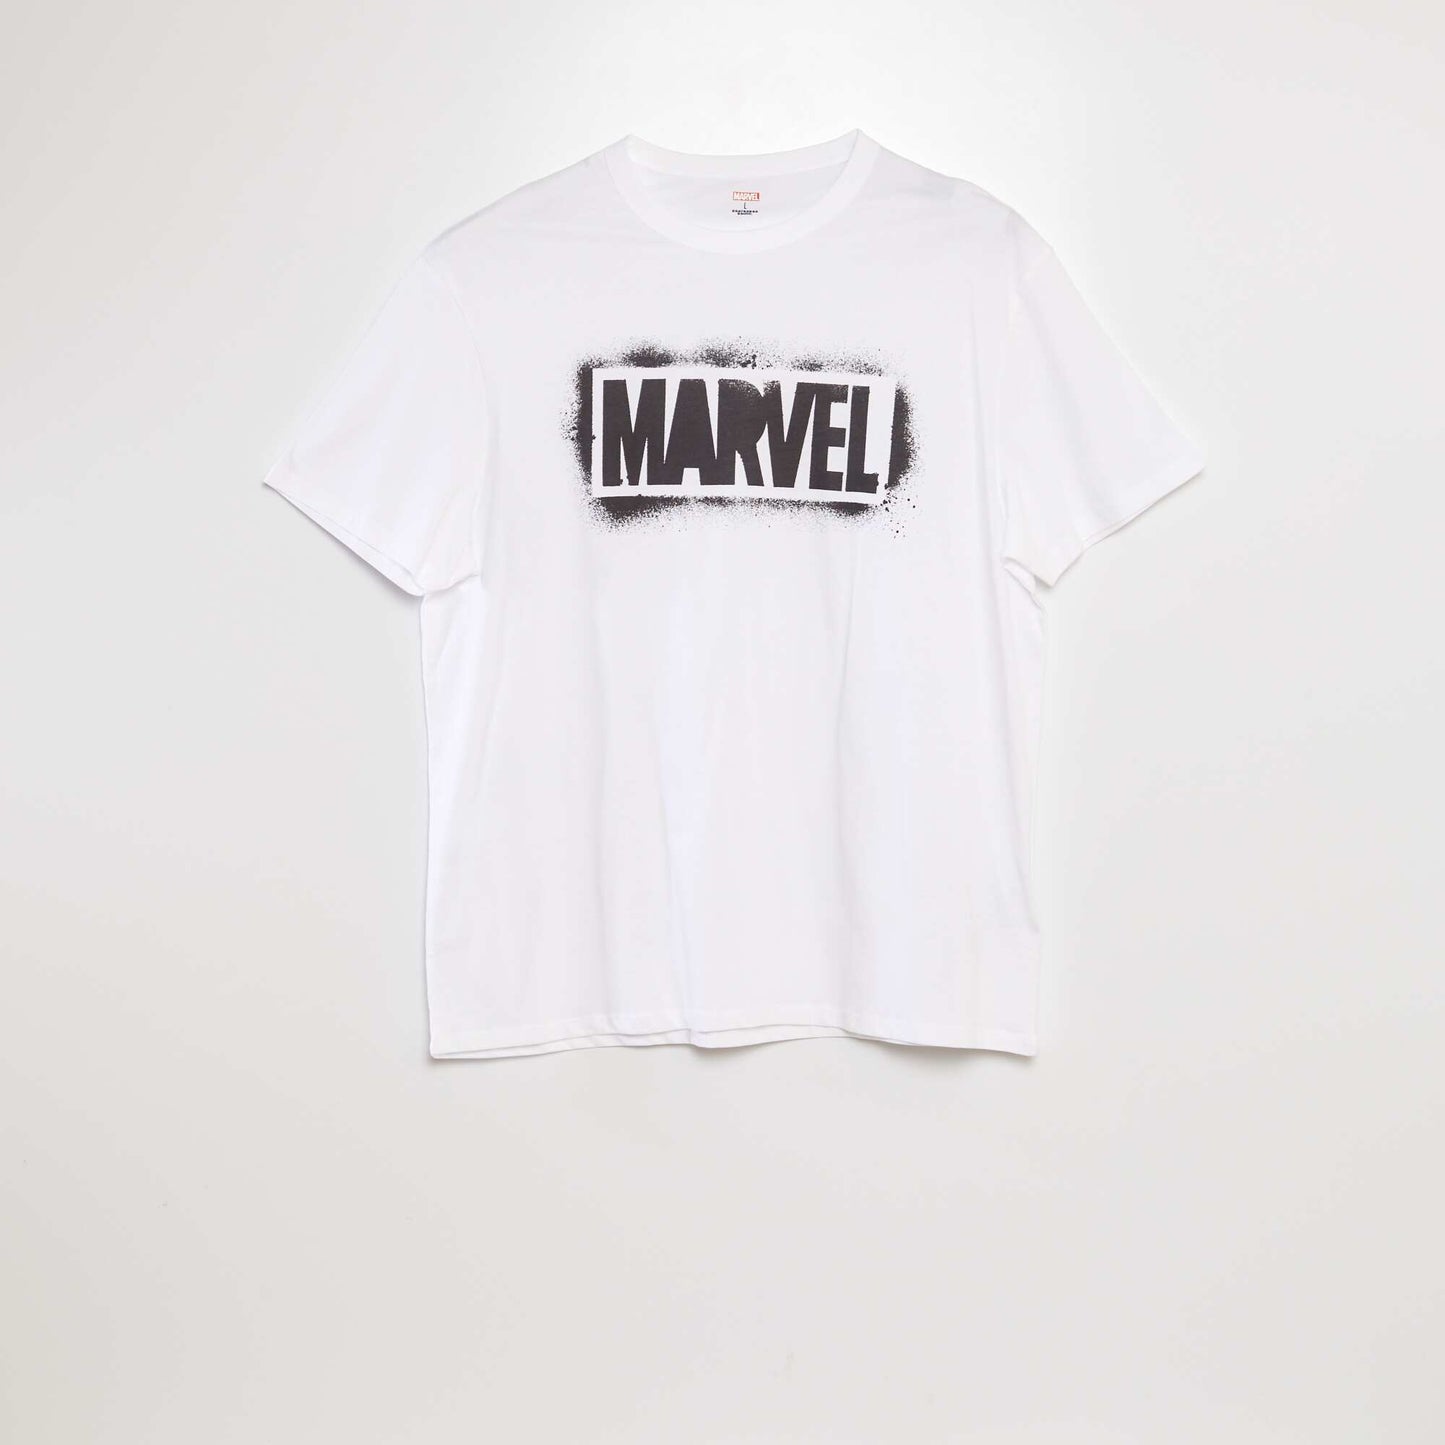 'MARVEL' pyjama set - 2-piece set BLACK